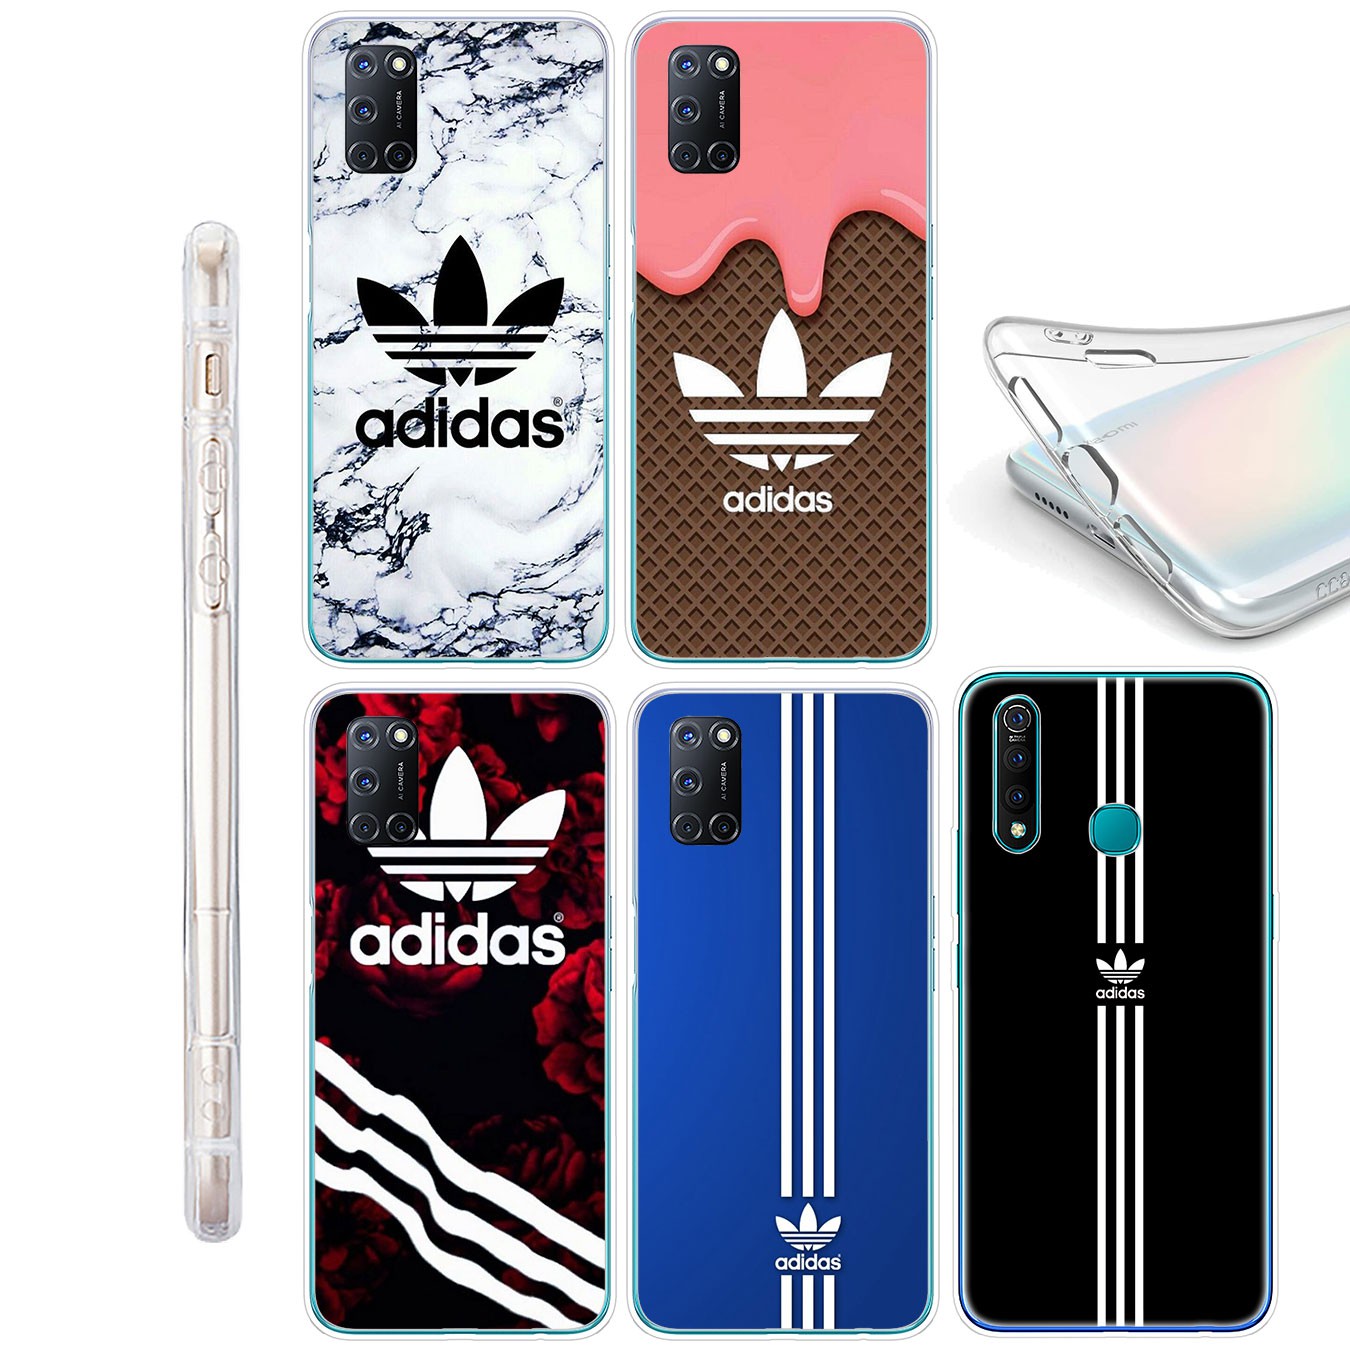 Ốp lưng silicon họa tiết logo Adidas cho Samsung Galaxy S20 Ultra S10 Lite S9 Plus A11 S9+ S20+ S10+